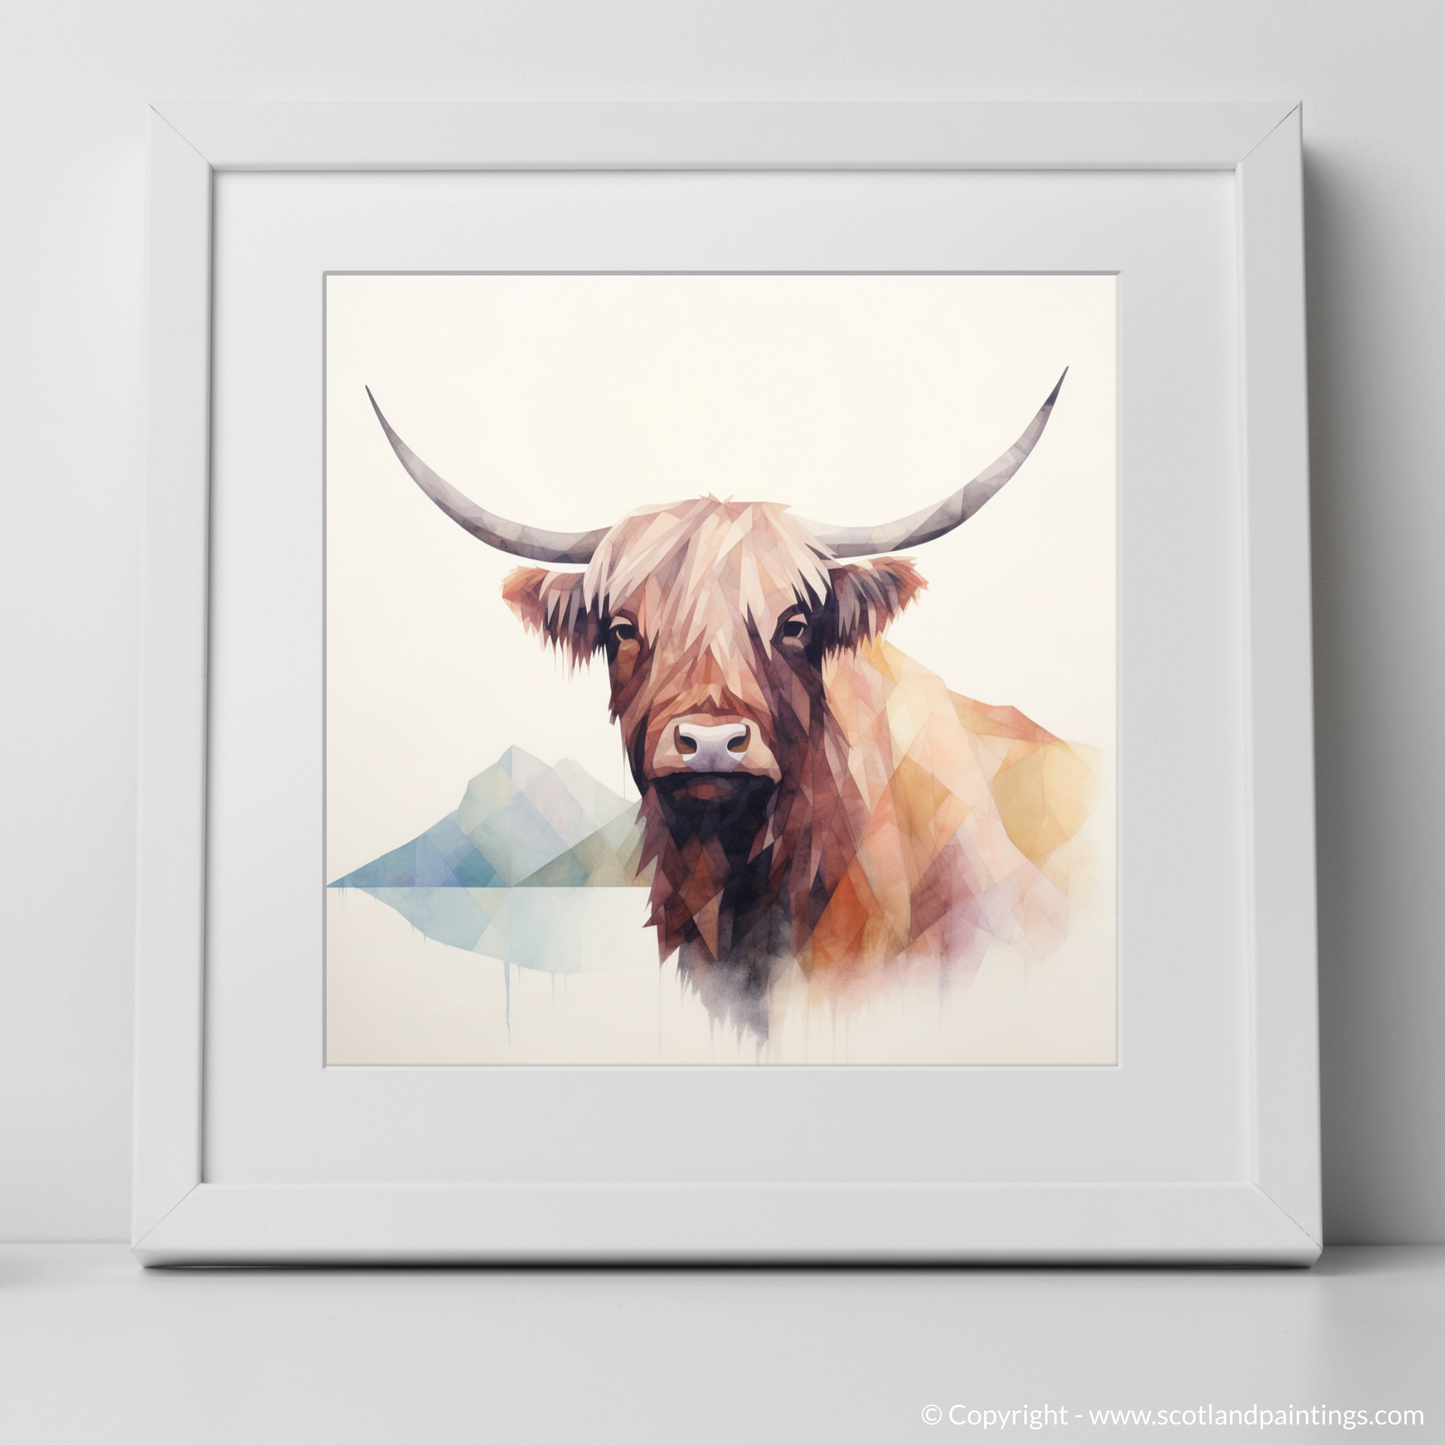 Highland Elegance: A Minimalist Homage to Scotland's Majestic Cow